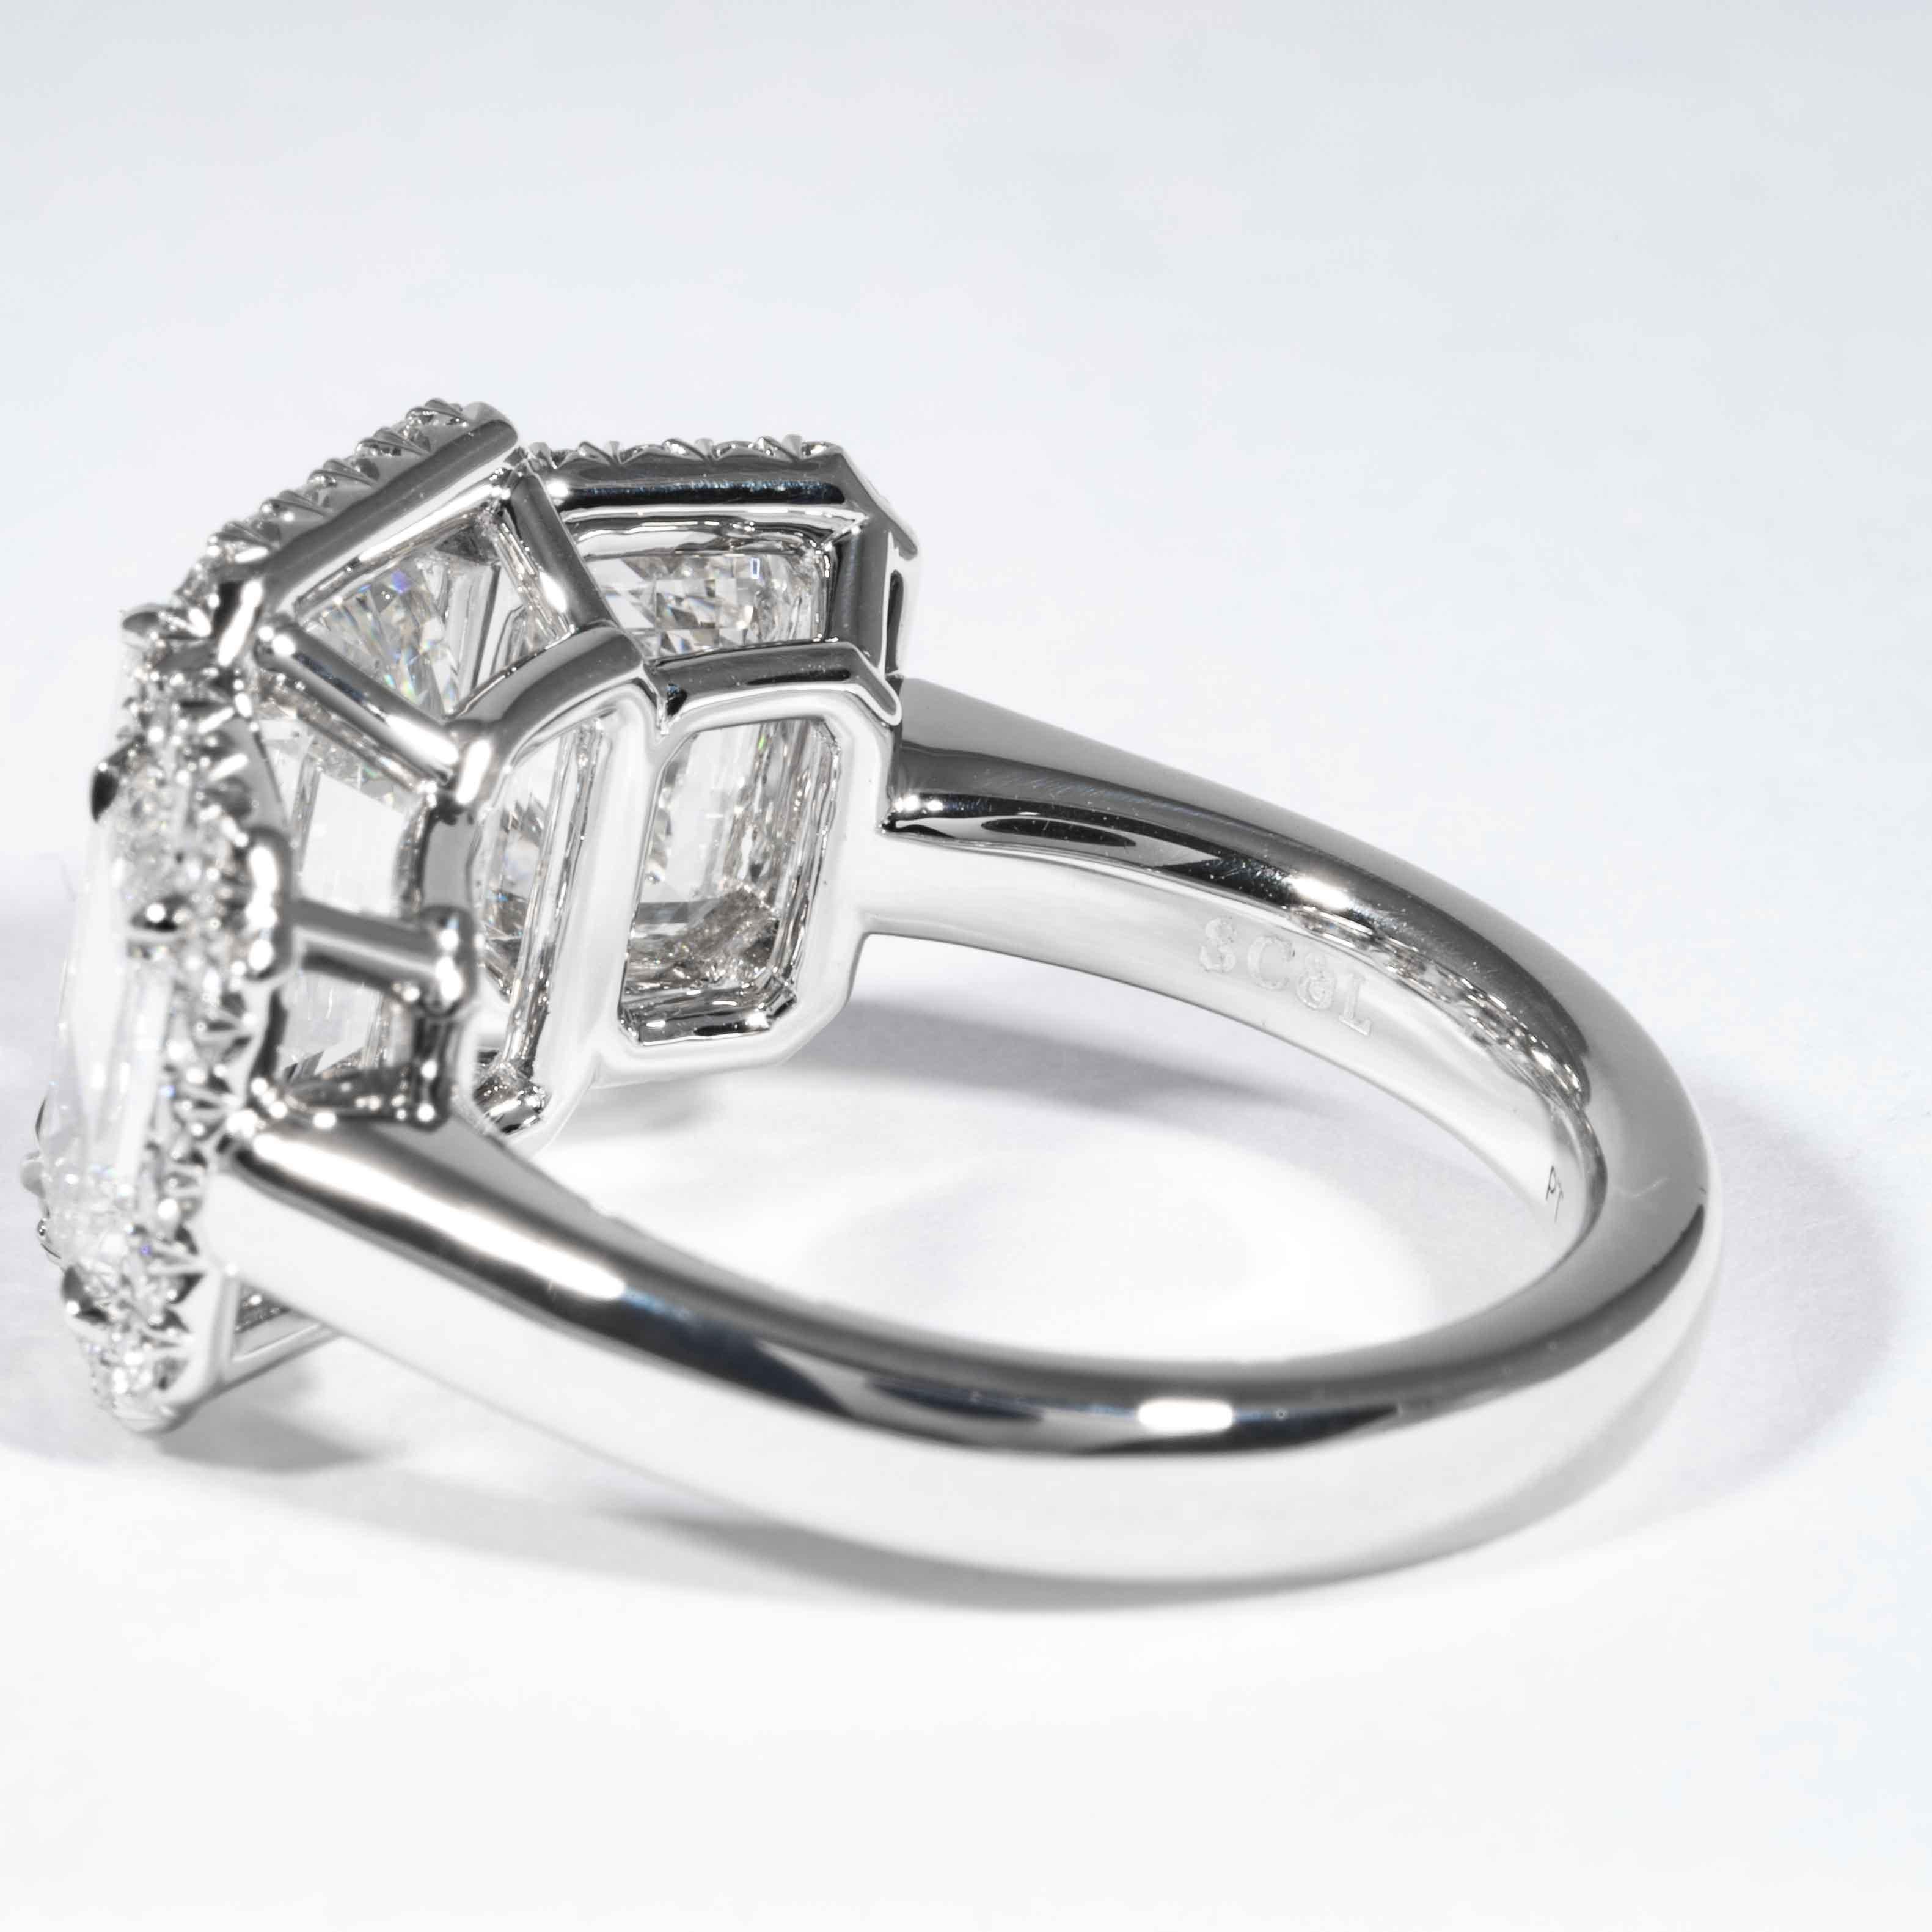 Women's Shreve, Crump & Low GIA Certified 3.23 Carat G SI1 Emerald Cut Diamond Ring For Sale